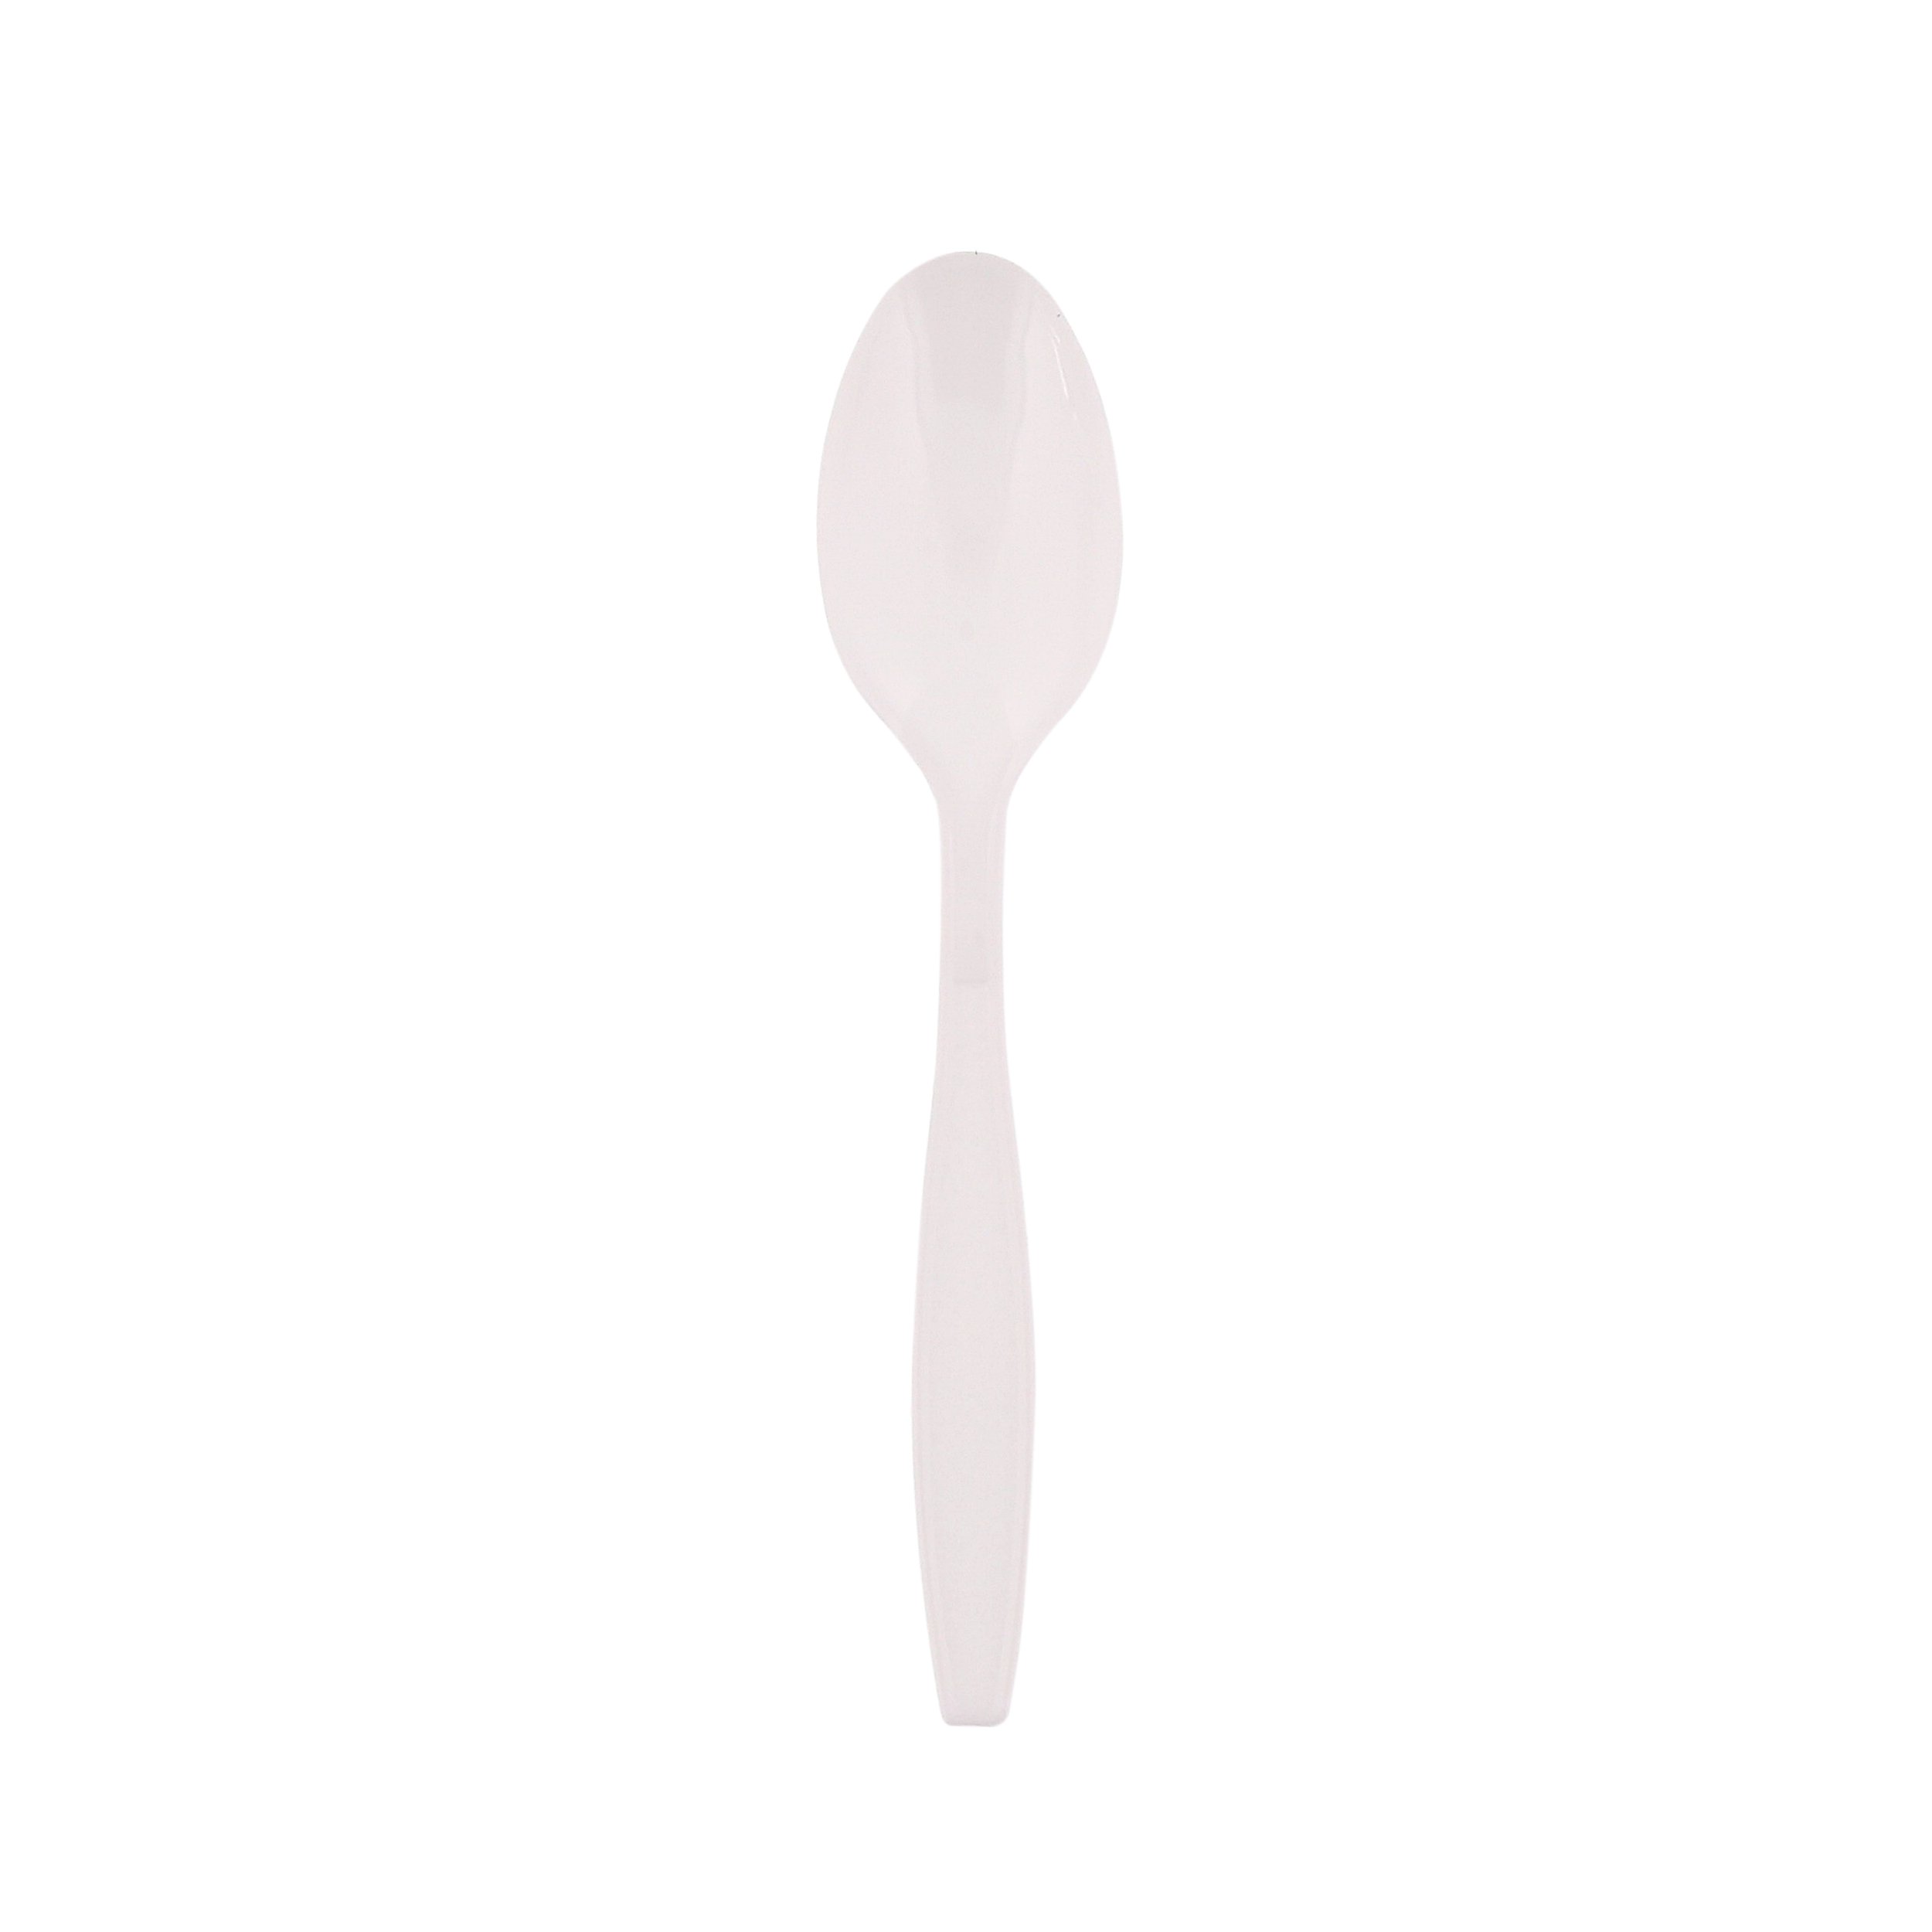 Spoon Heavy White PS (1000)